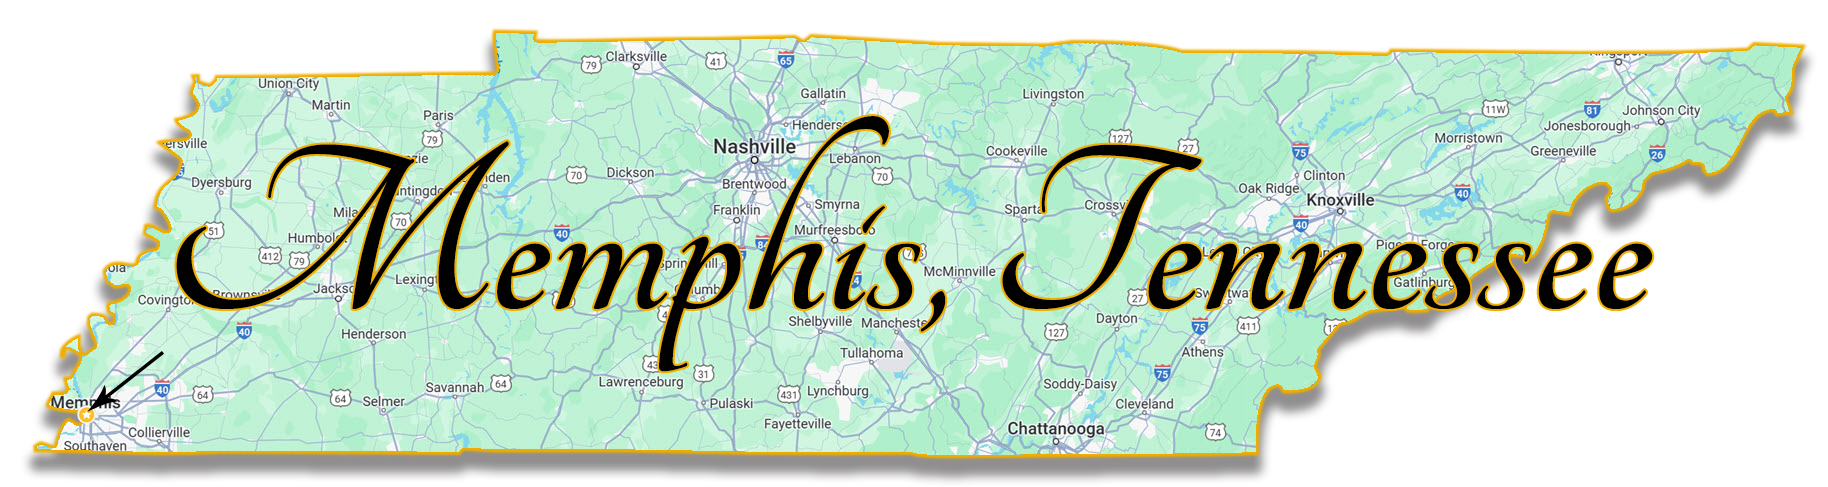 Memphis Tennessee